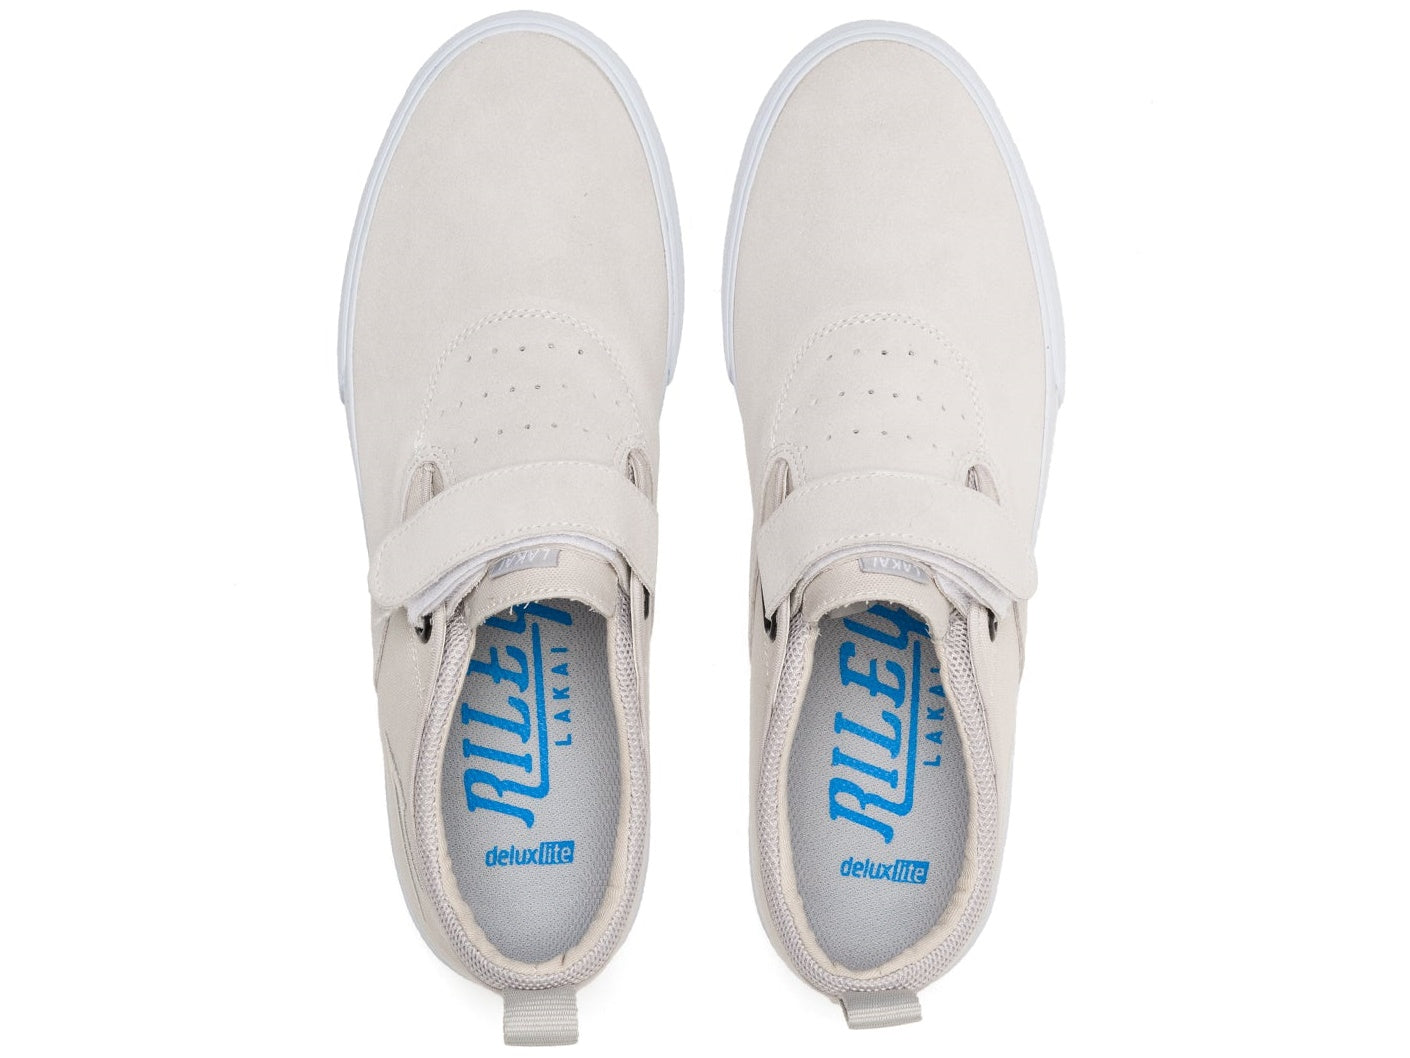 LAKAI Riley 2 VS Shoes - White Suede - 5.5US